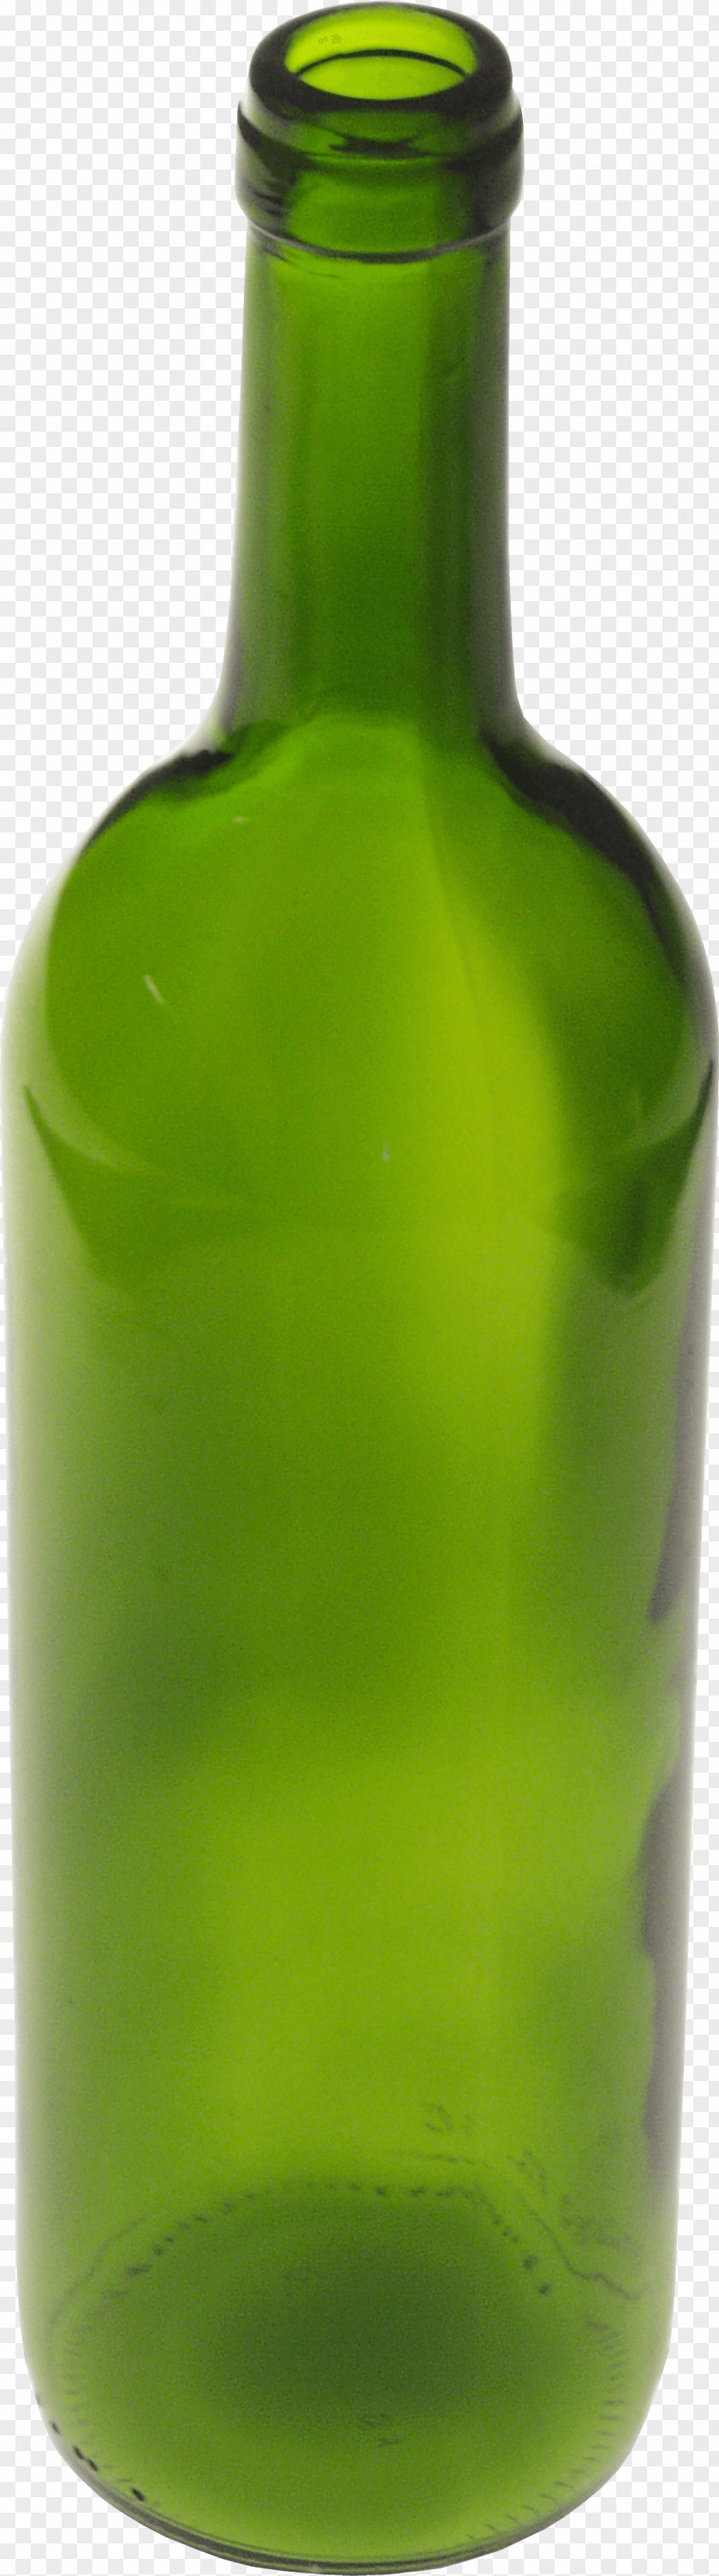 Greem Glass Bottle Clip Art PNG